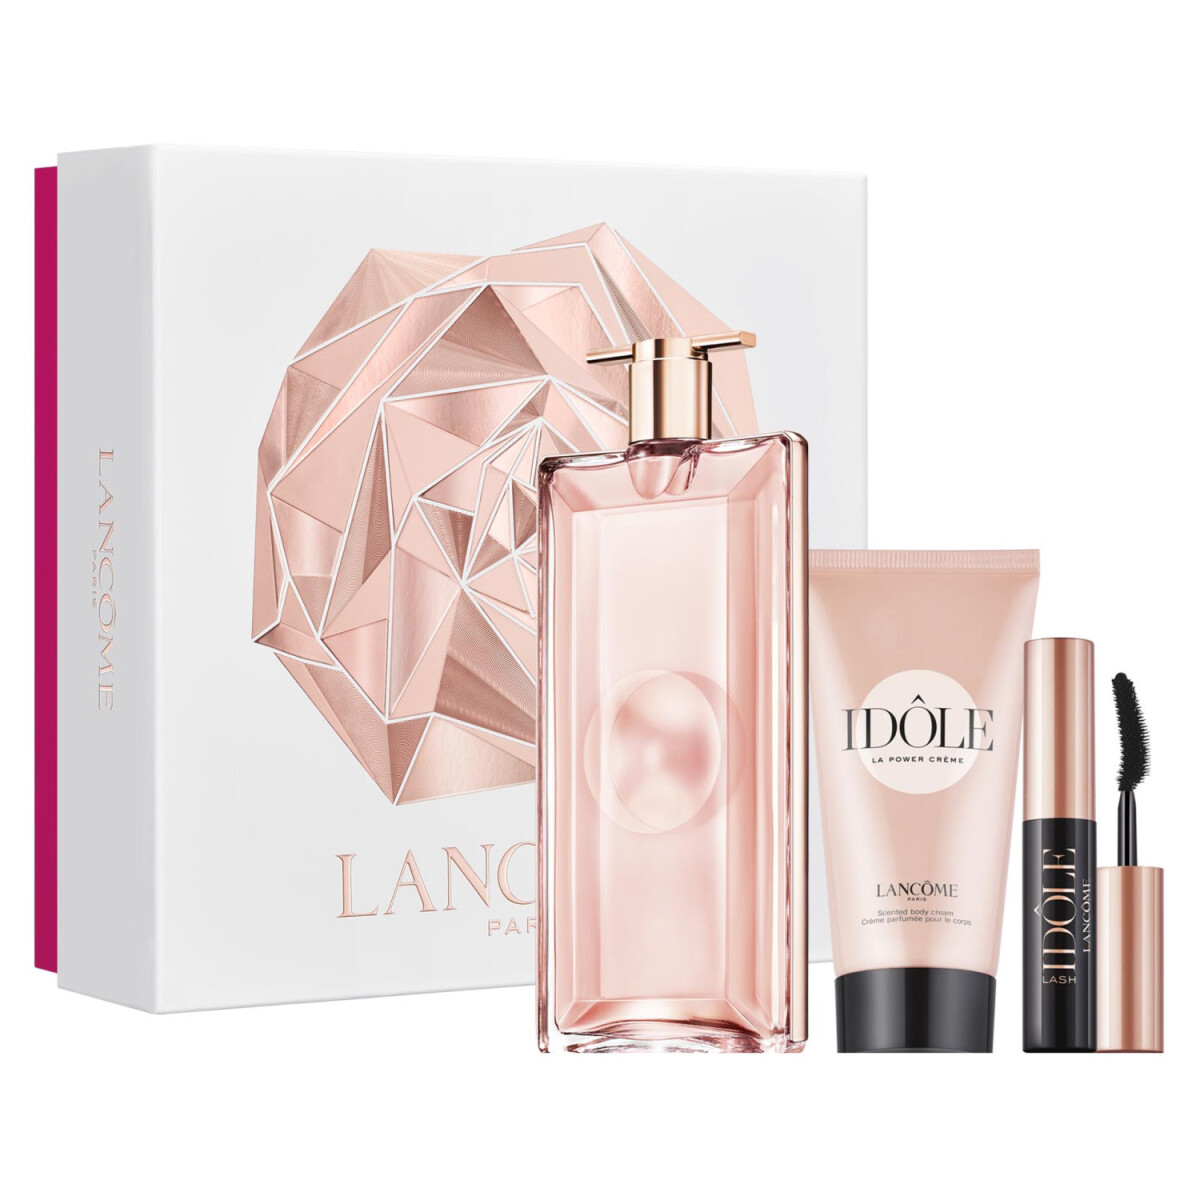 Perfume Cofre Lancome Idole 50ml 